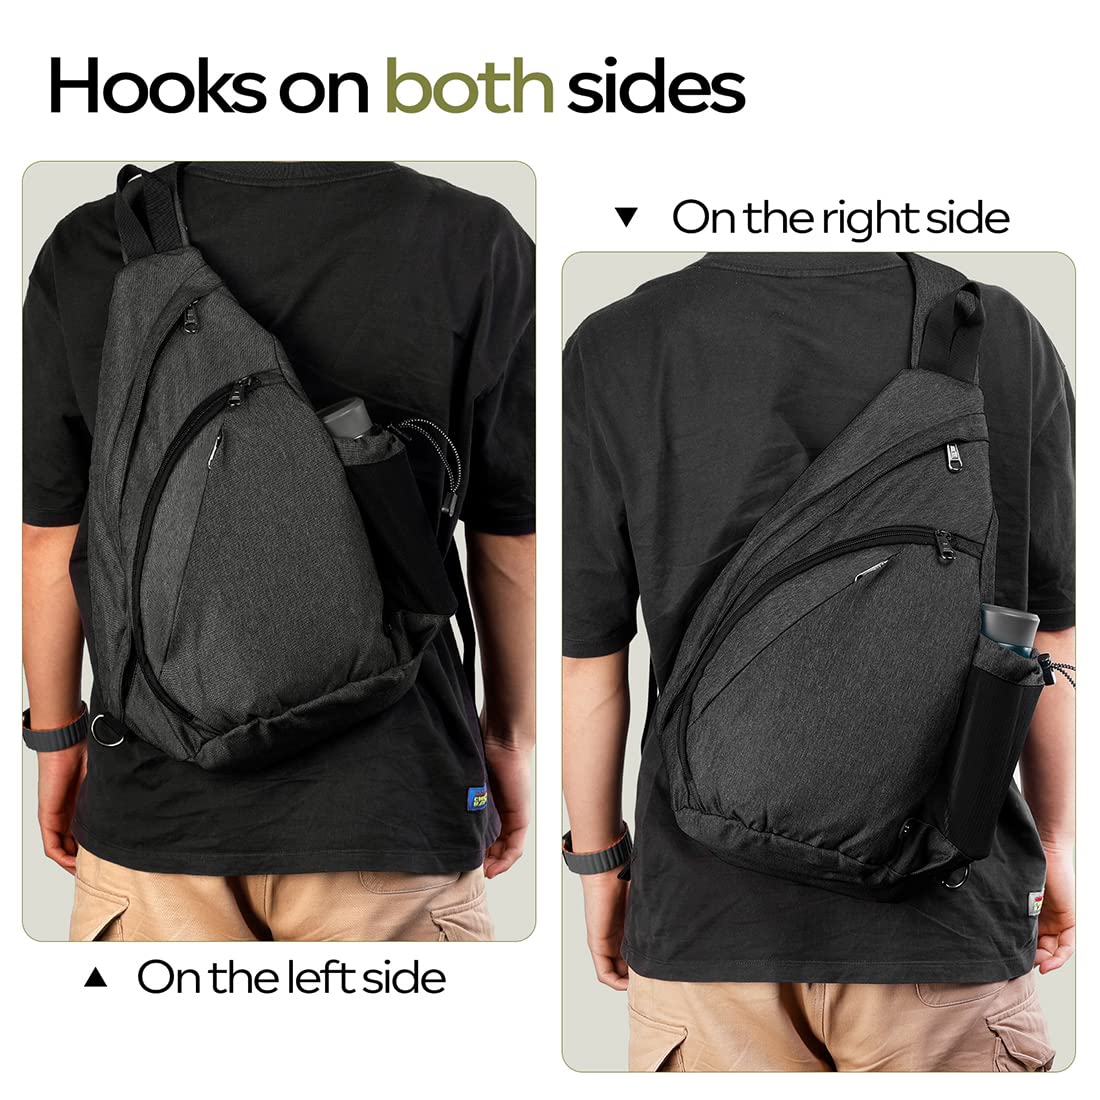 OutdoorMaster Sling Bag - Crossbody Shoulder Chest Urban Outdoor Travel Backpack for Women & Men